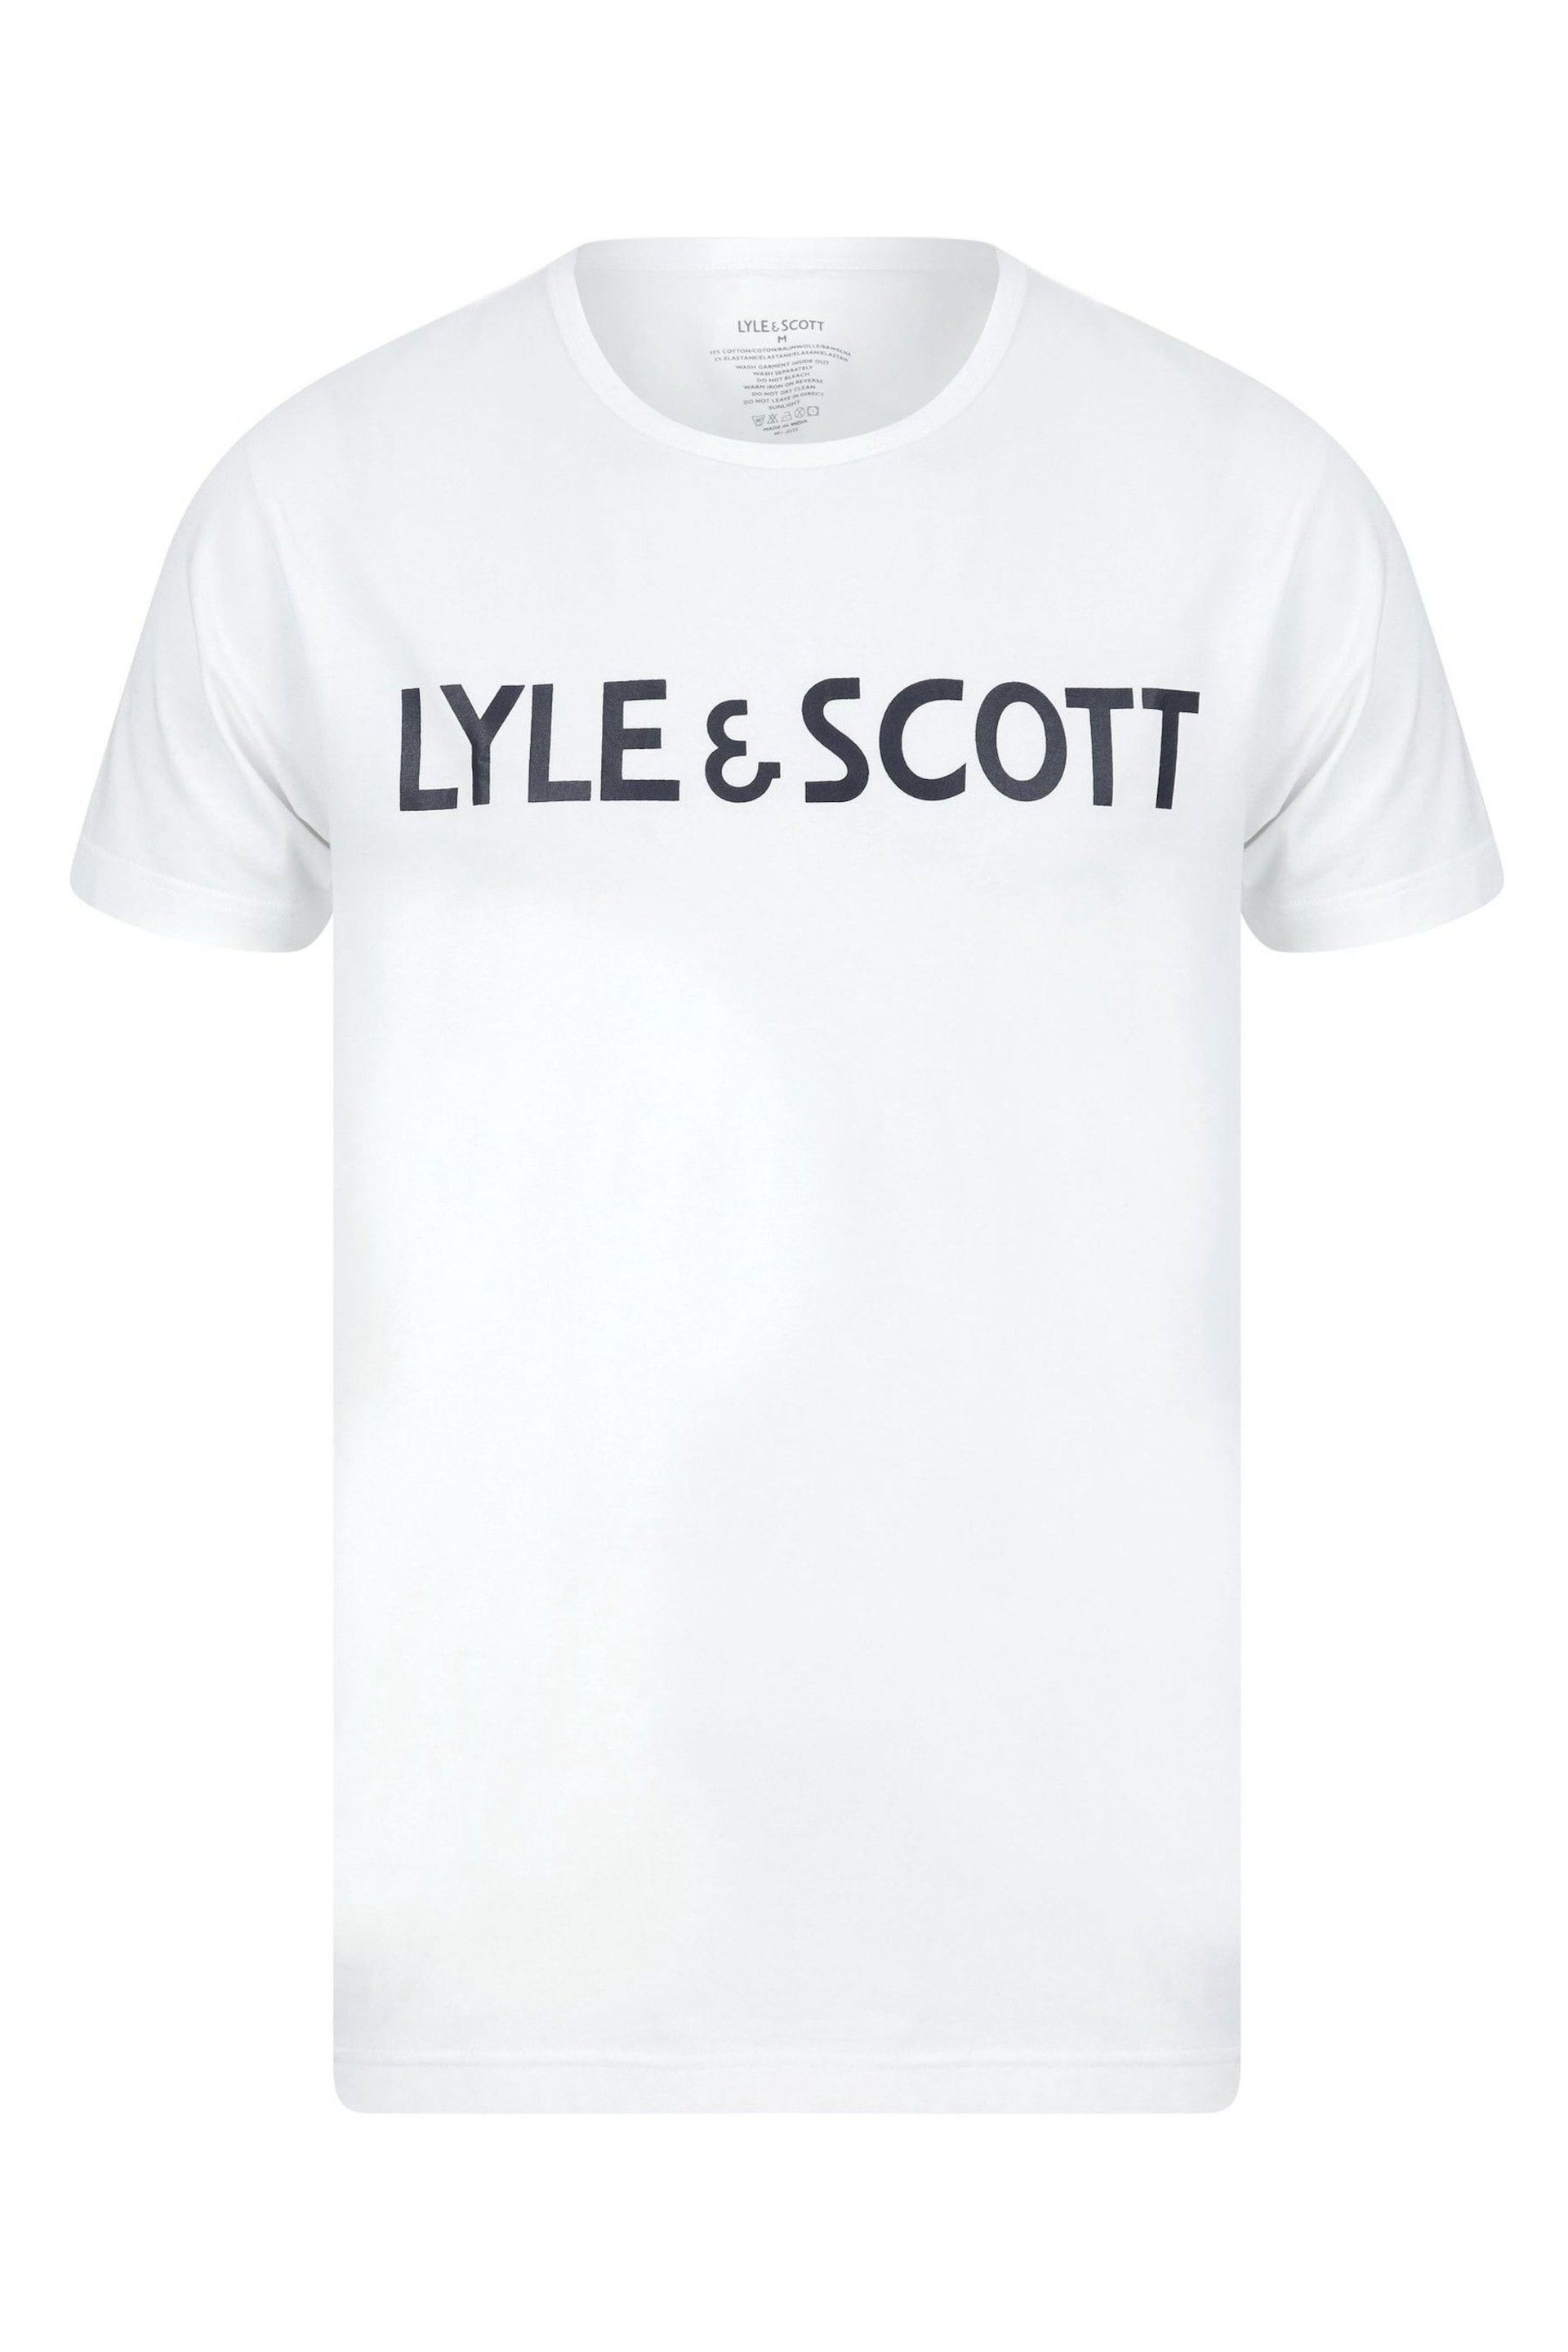 Lyle & Scott August Black Loungewear T-Shirts 3 Pack - Image 2 of 5